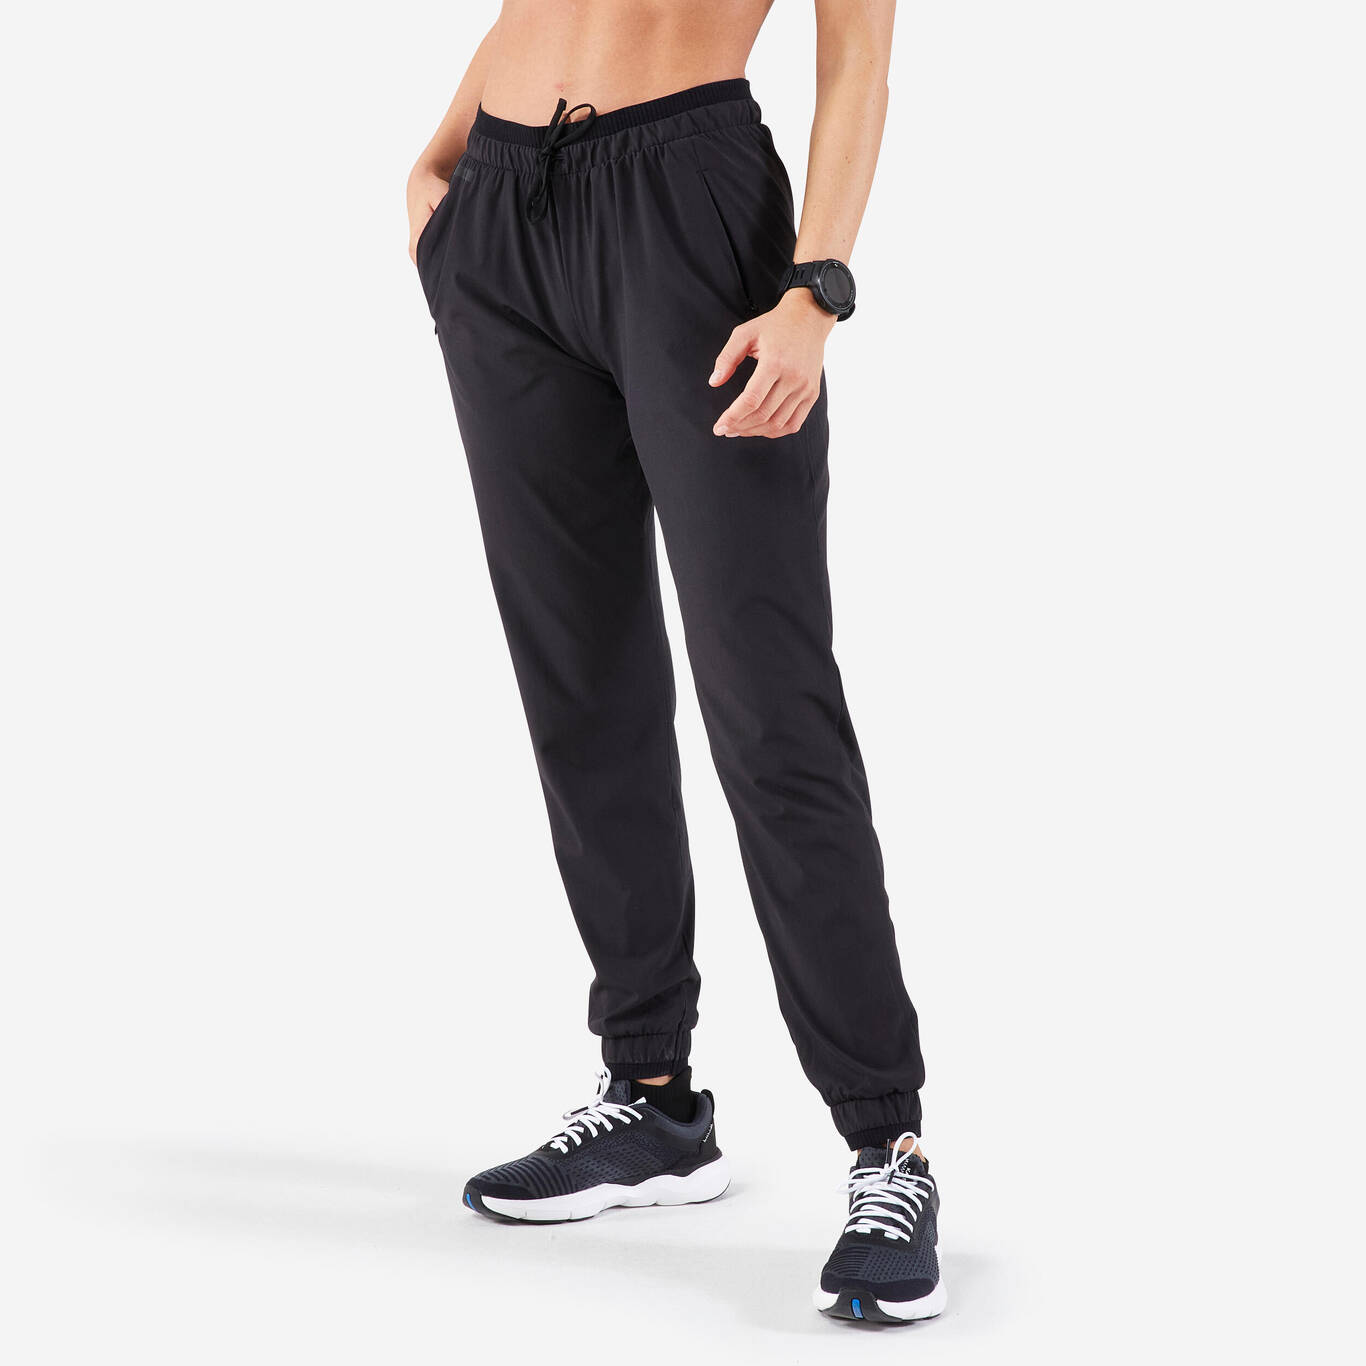 Buy Men's Running Breathable Trousers Dry - Black Online